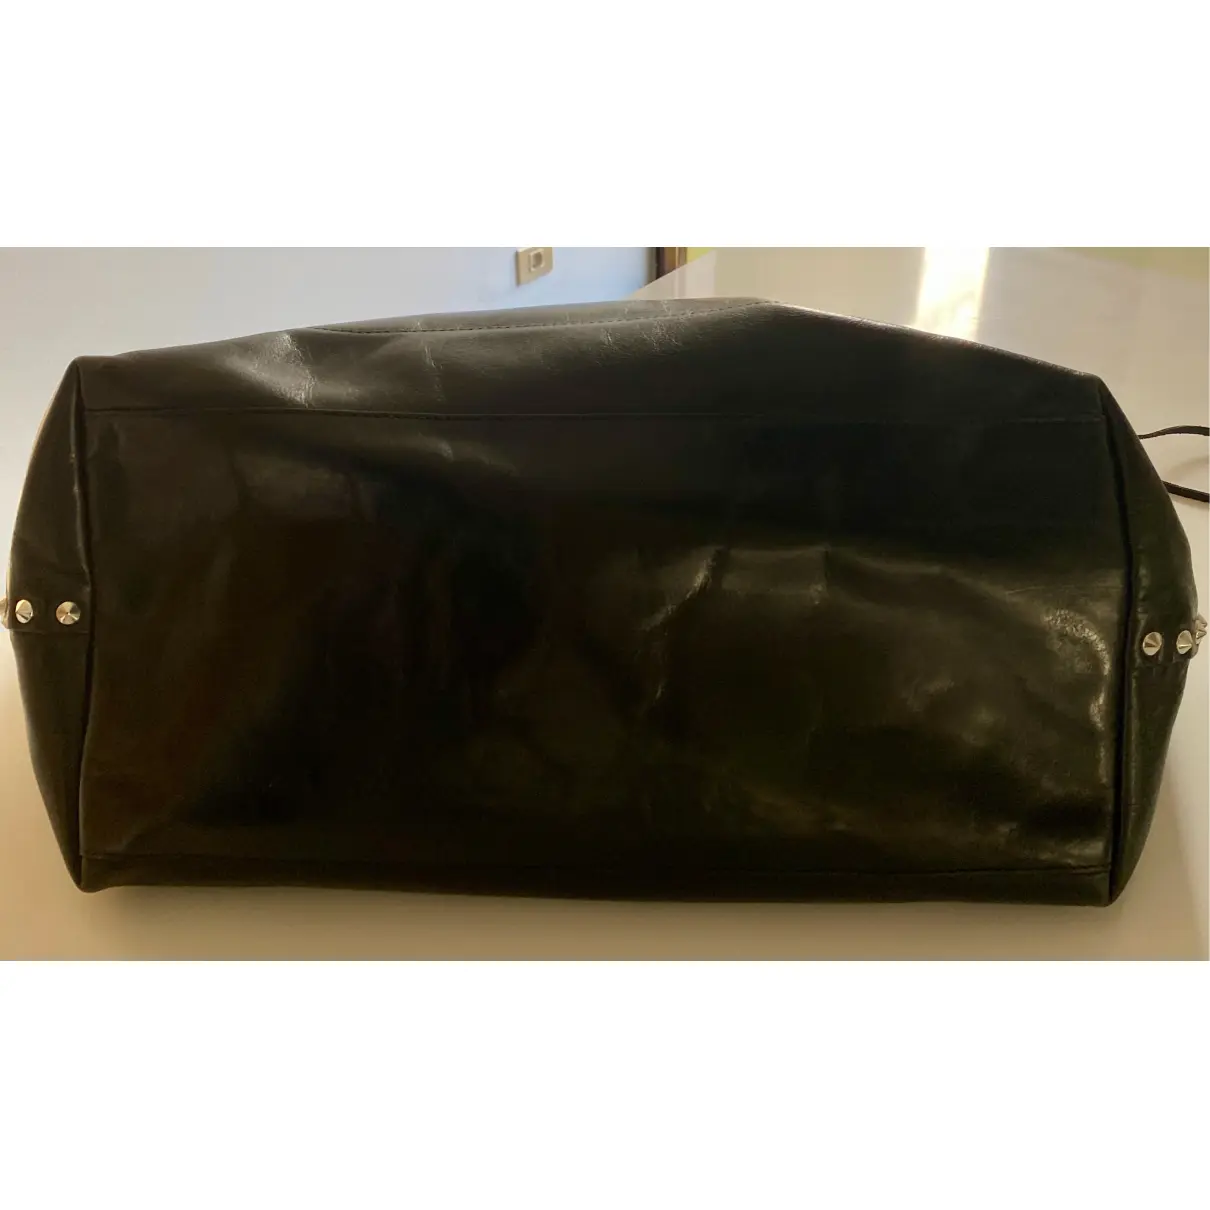 Leather handbag Htc